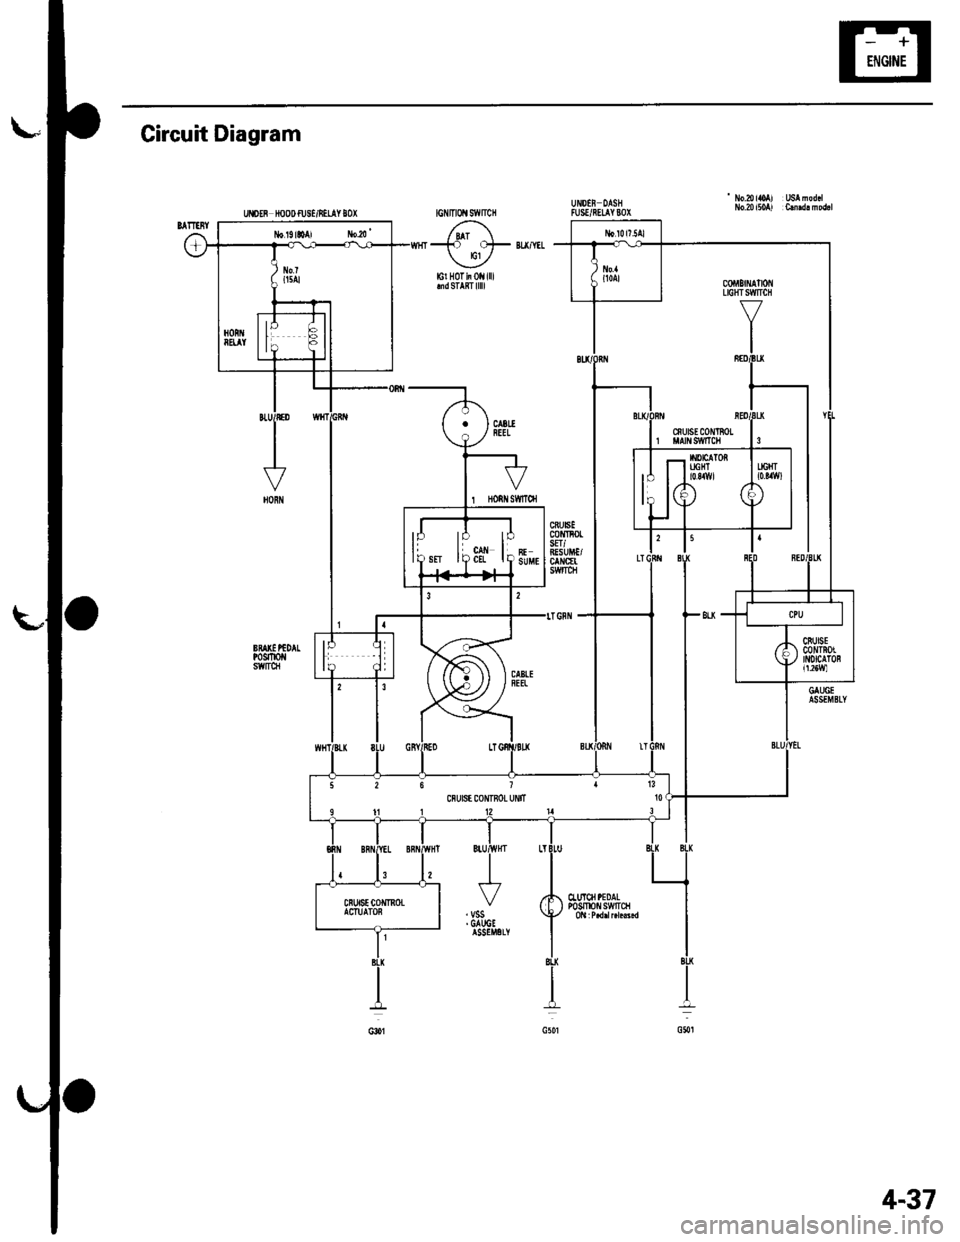 HONDA CIVIC 2003 7.G Workshop Manual Circuit Diagram
 No.aloAl USAnod.lNo.20 itoAl C.md! modrlUISEF NOOD fUS/iILAY IOX
-to ots BU/YIL
lcl H0Tii0llilllmdSTARTlllll
1 Honilsffroi
CTuICII PEDALP0sm0 swtrct
26 1113cnu6E coNTnoL uNtT l0
4-3